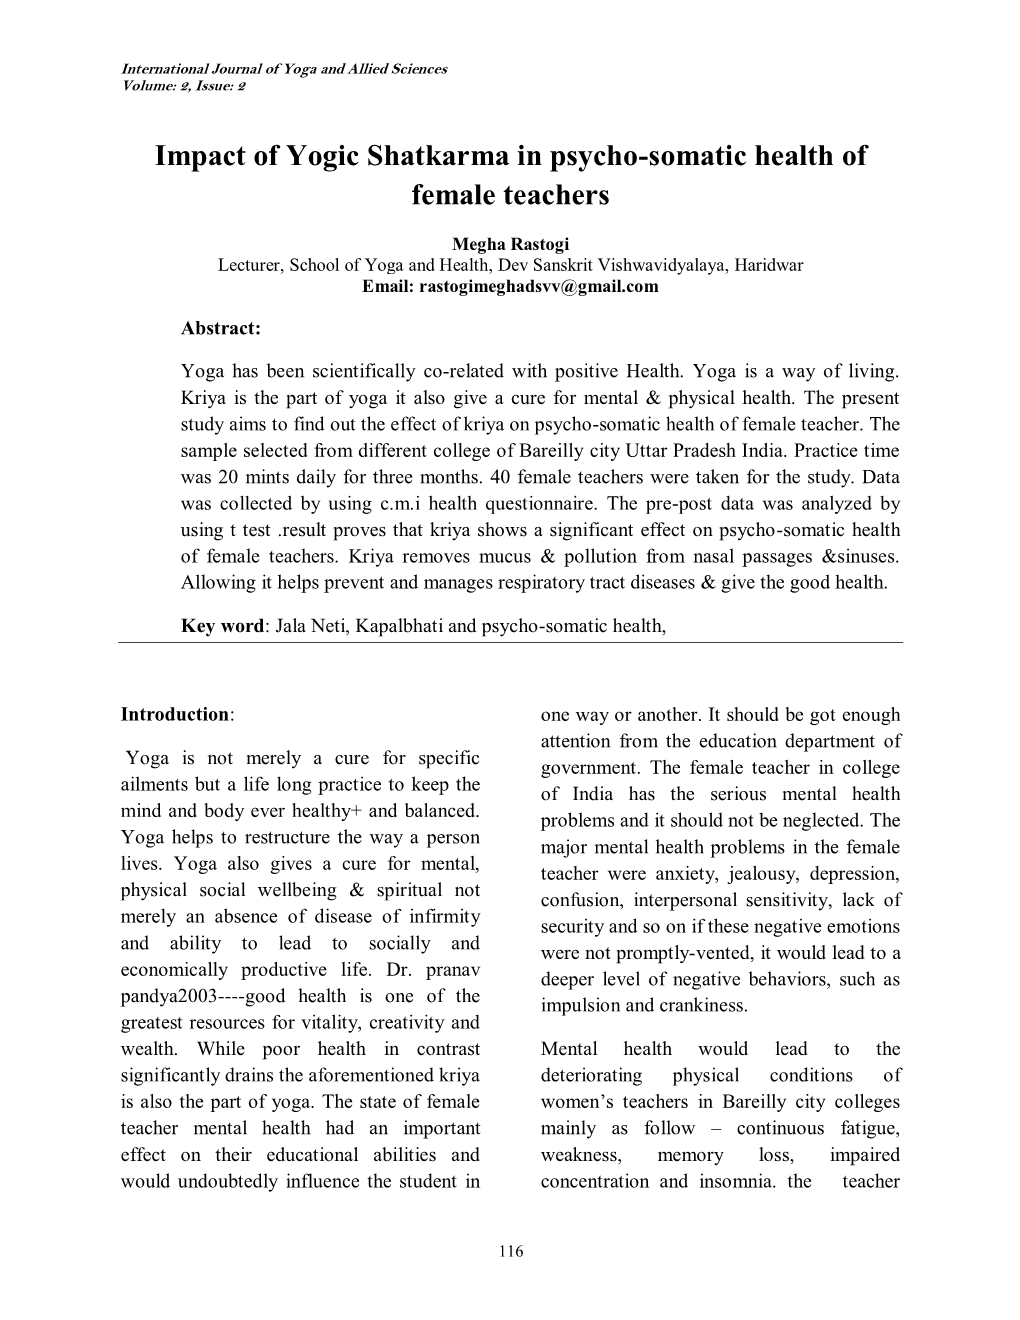 Impact of Yogic Shatkarma in Psycho-Somatic Health of Female Teachers